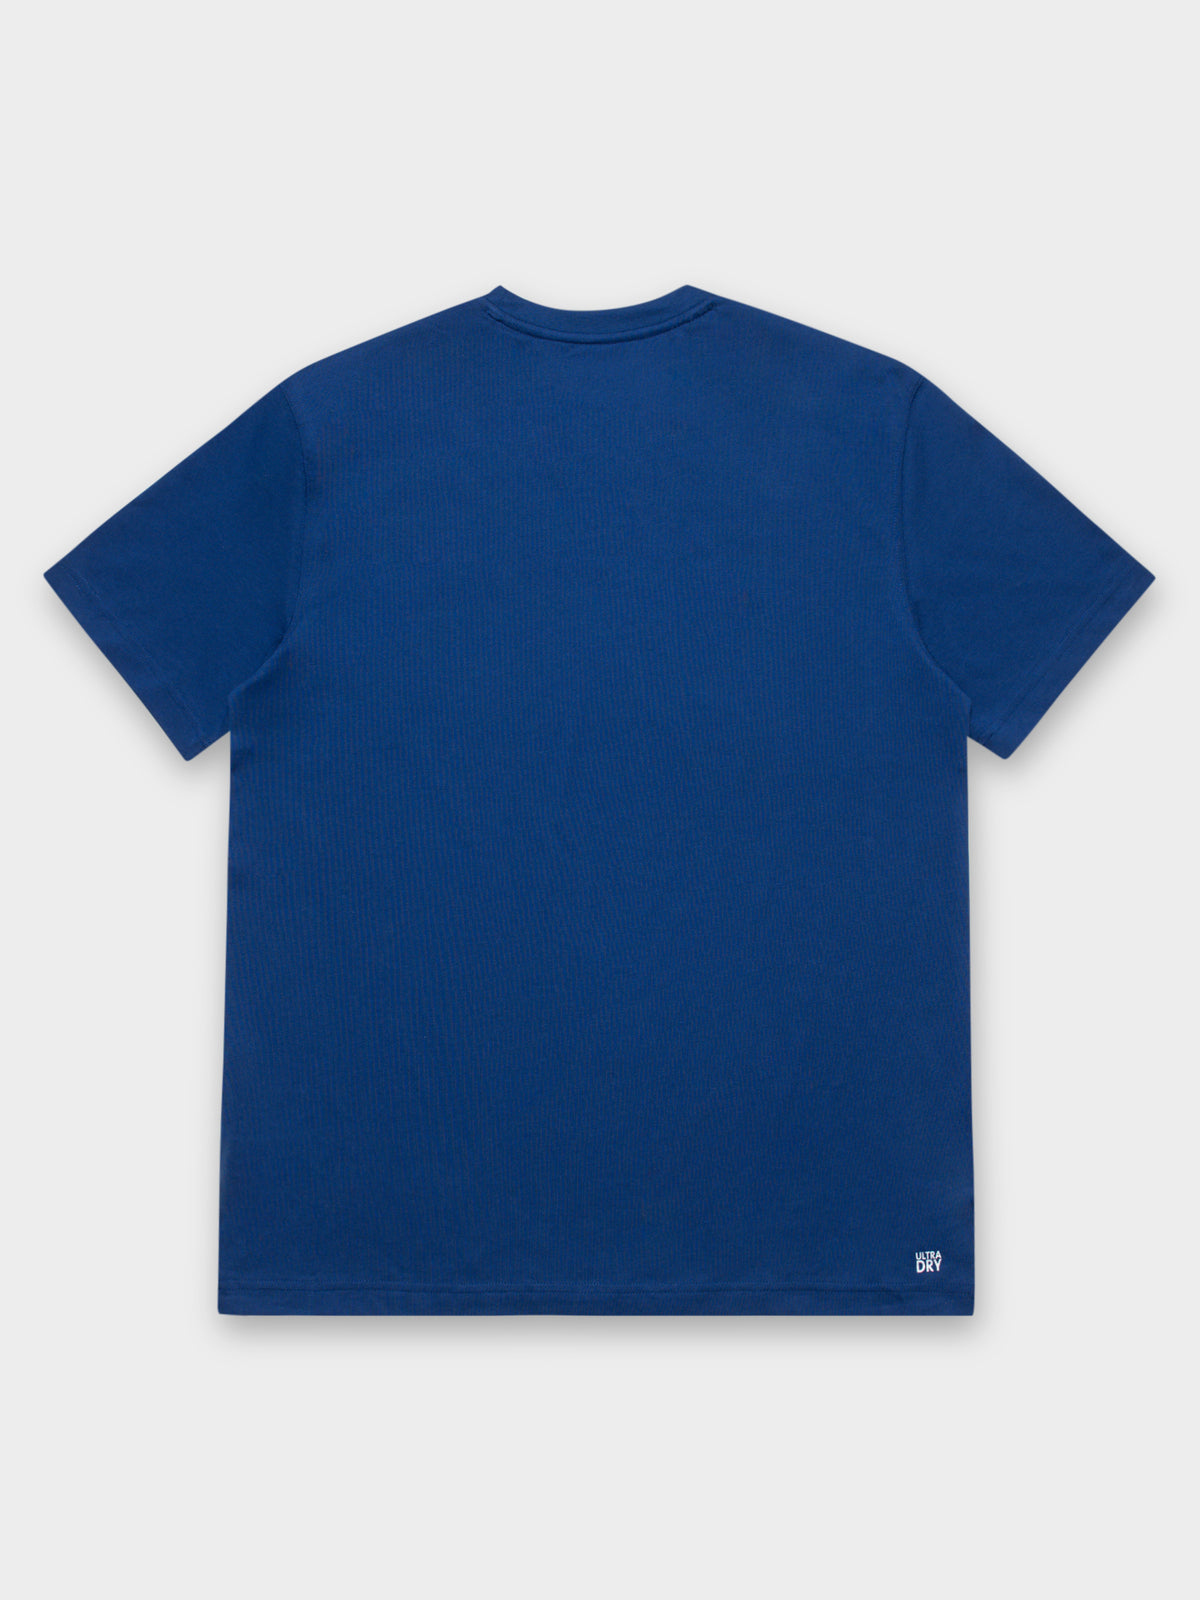 Essentials Crew T-Shirt in Blue